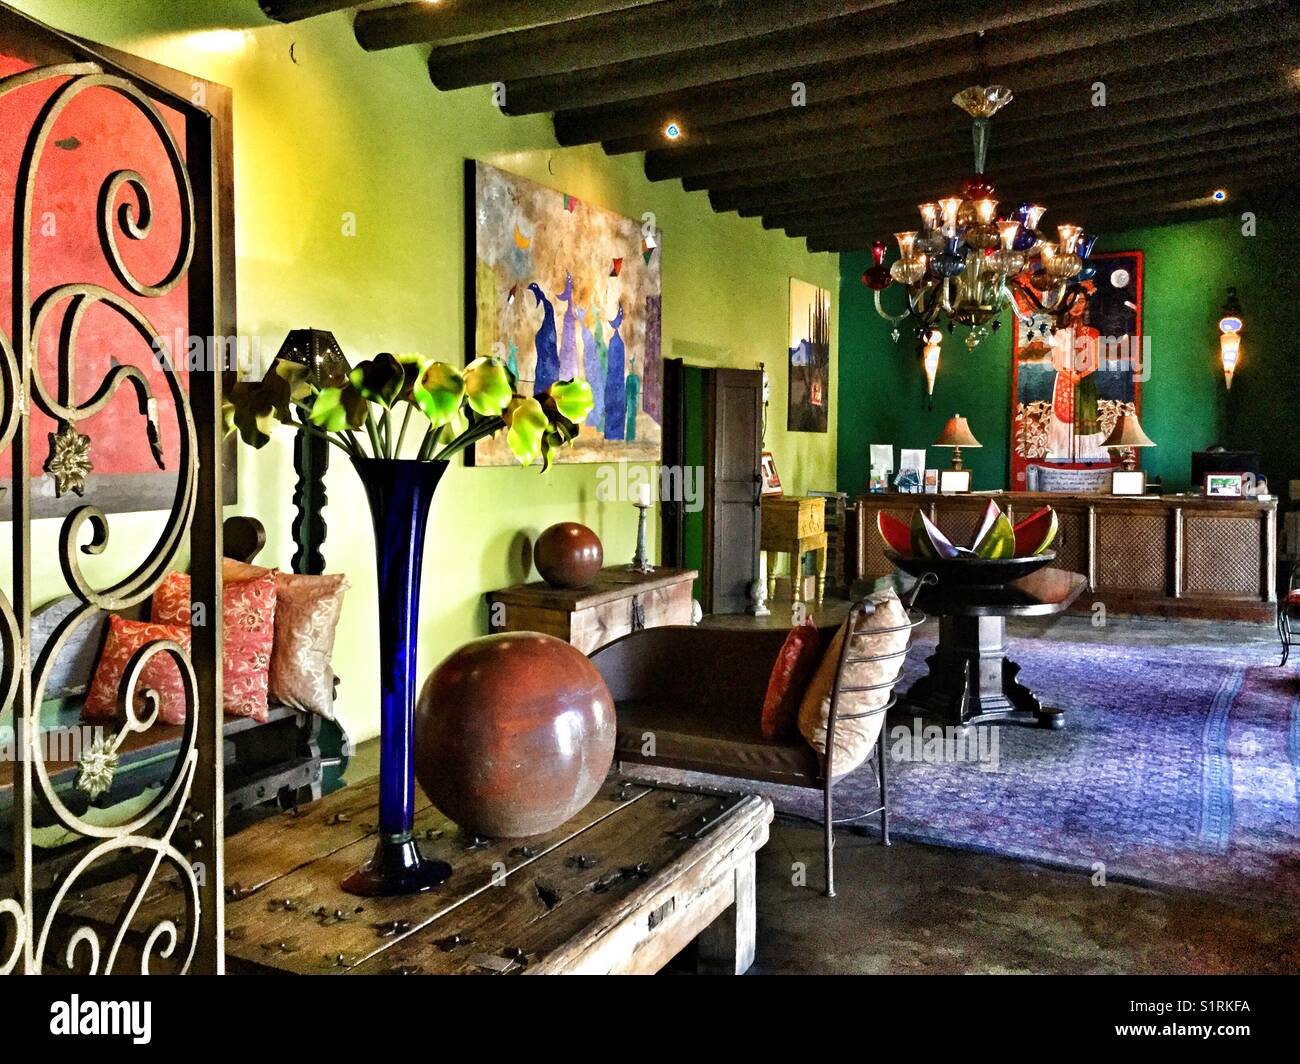 The reception area of the Hotel California in Todos Santos, Mexico. Stock Photo